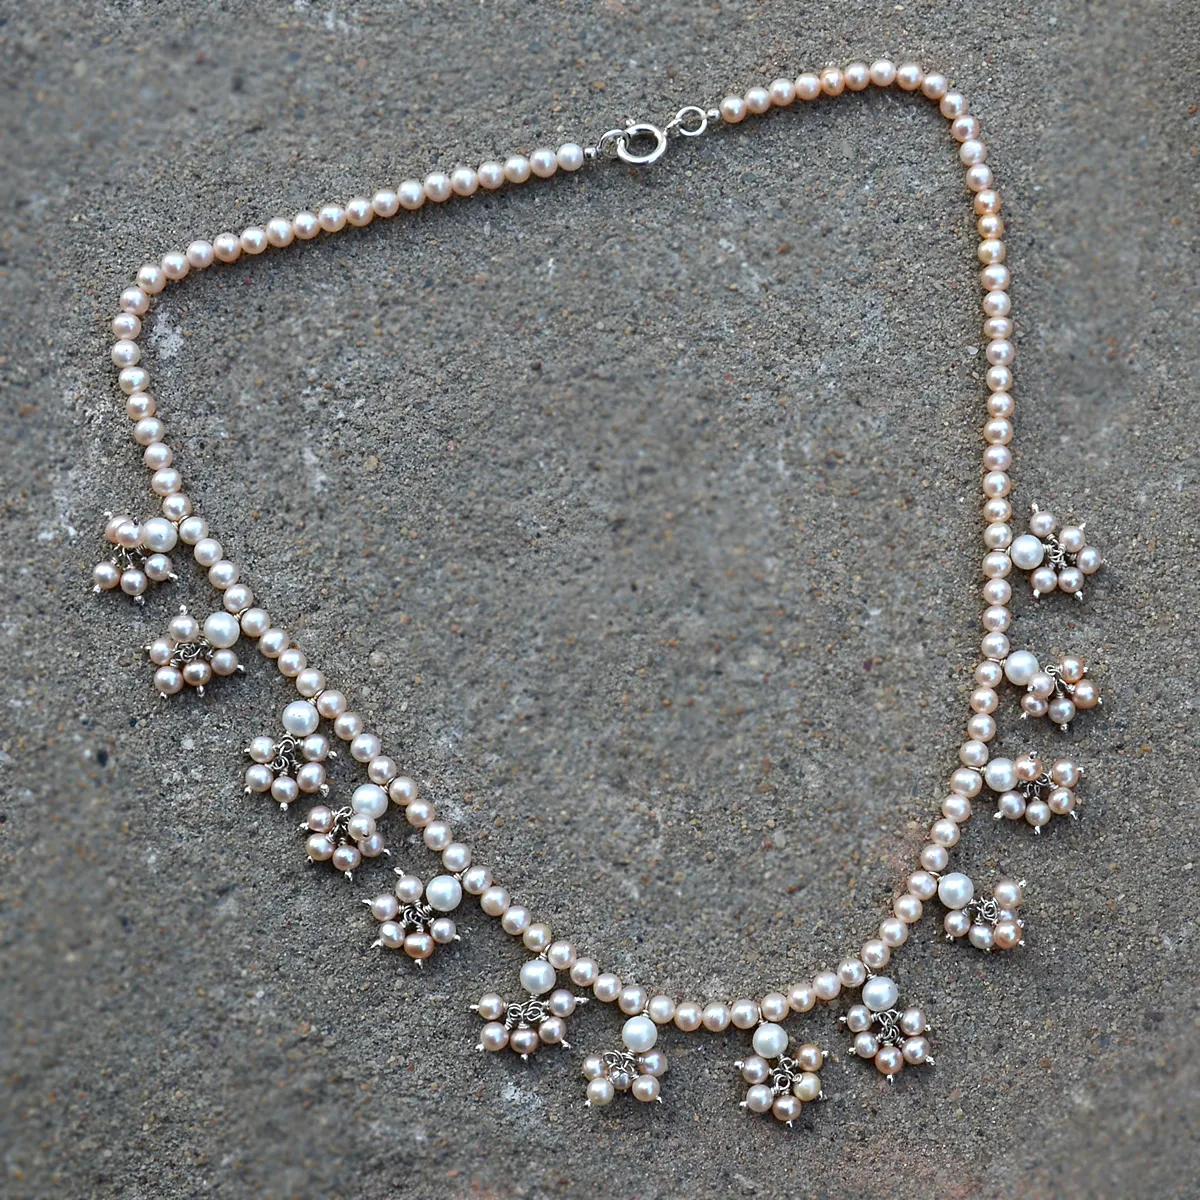 Collier de perles en acier inoxydable 4mm, porte-bonheur, pendentif de perles, breloque, bien vue, pour artistes